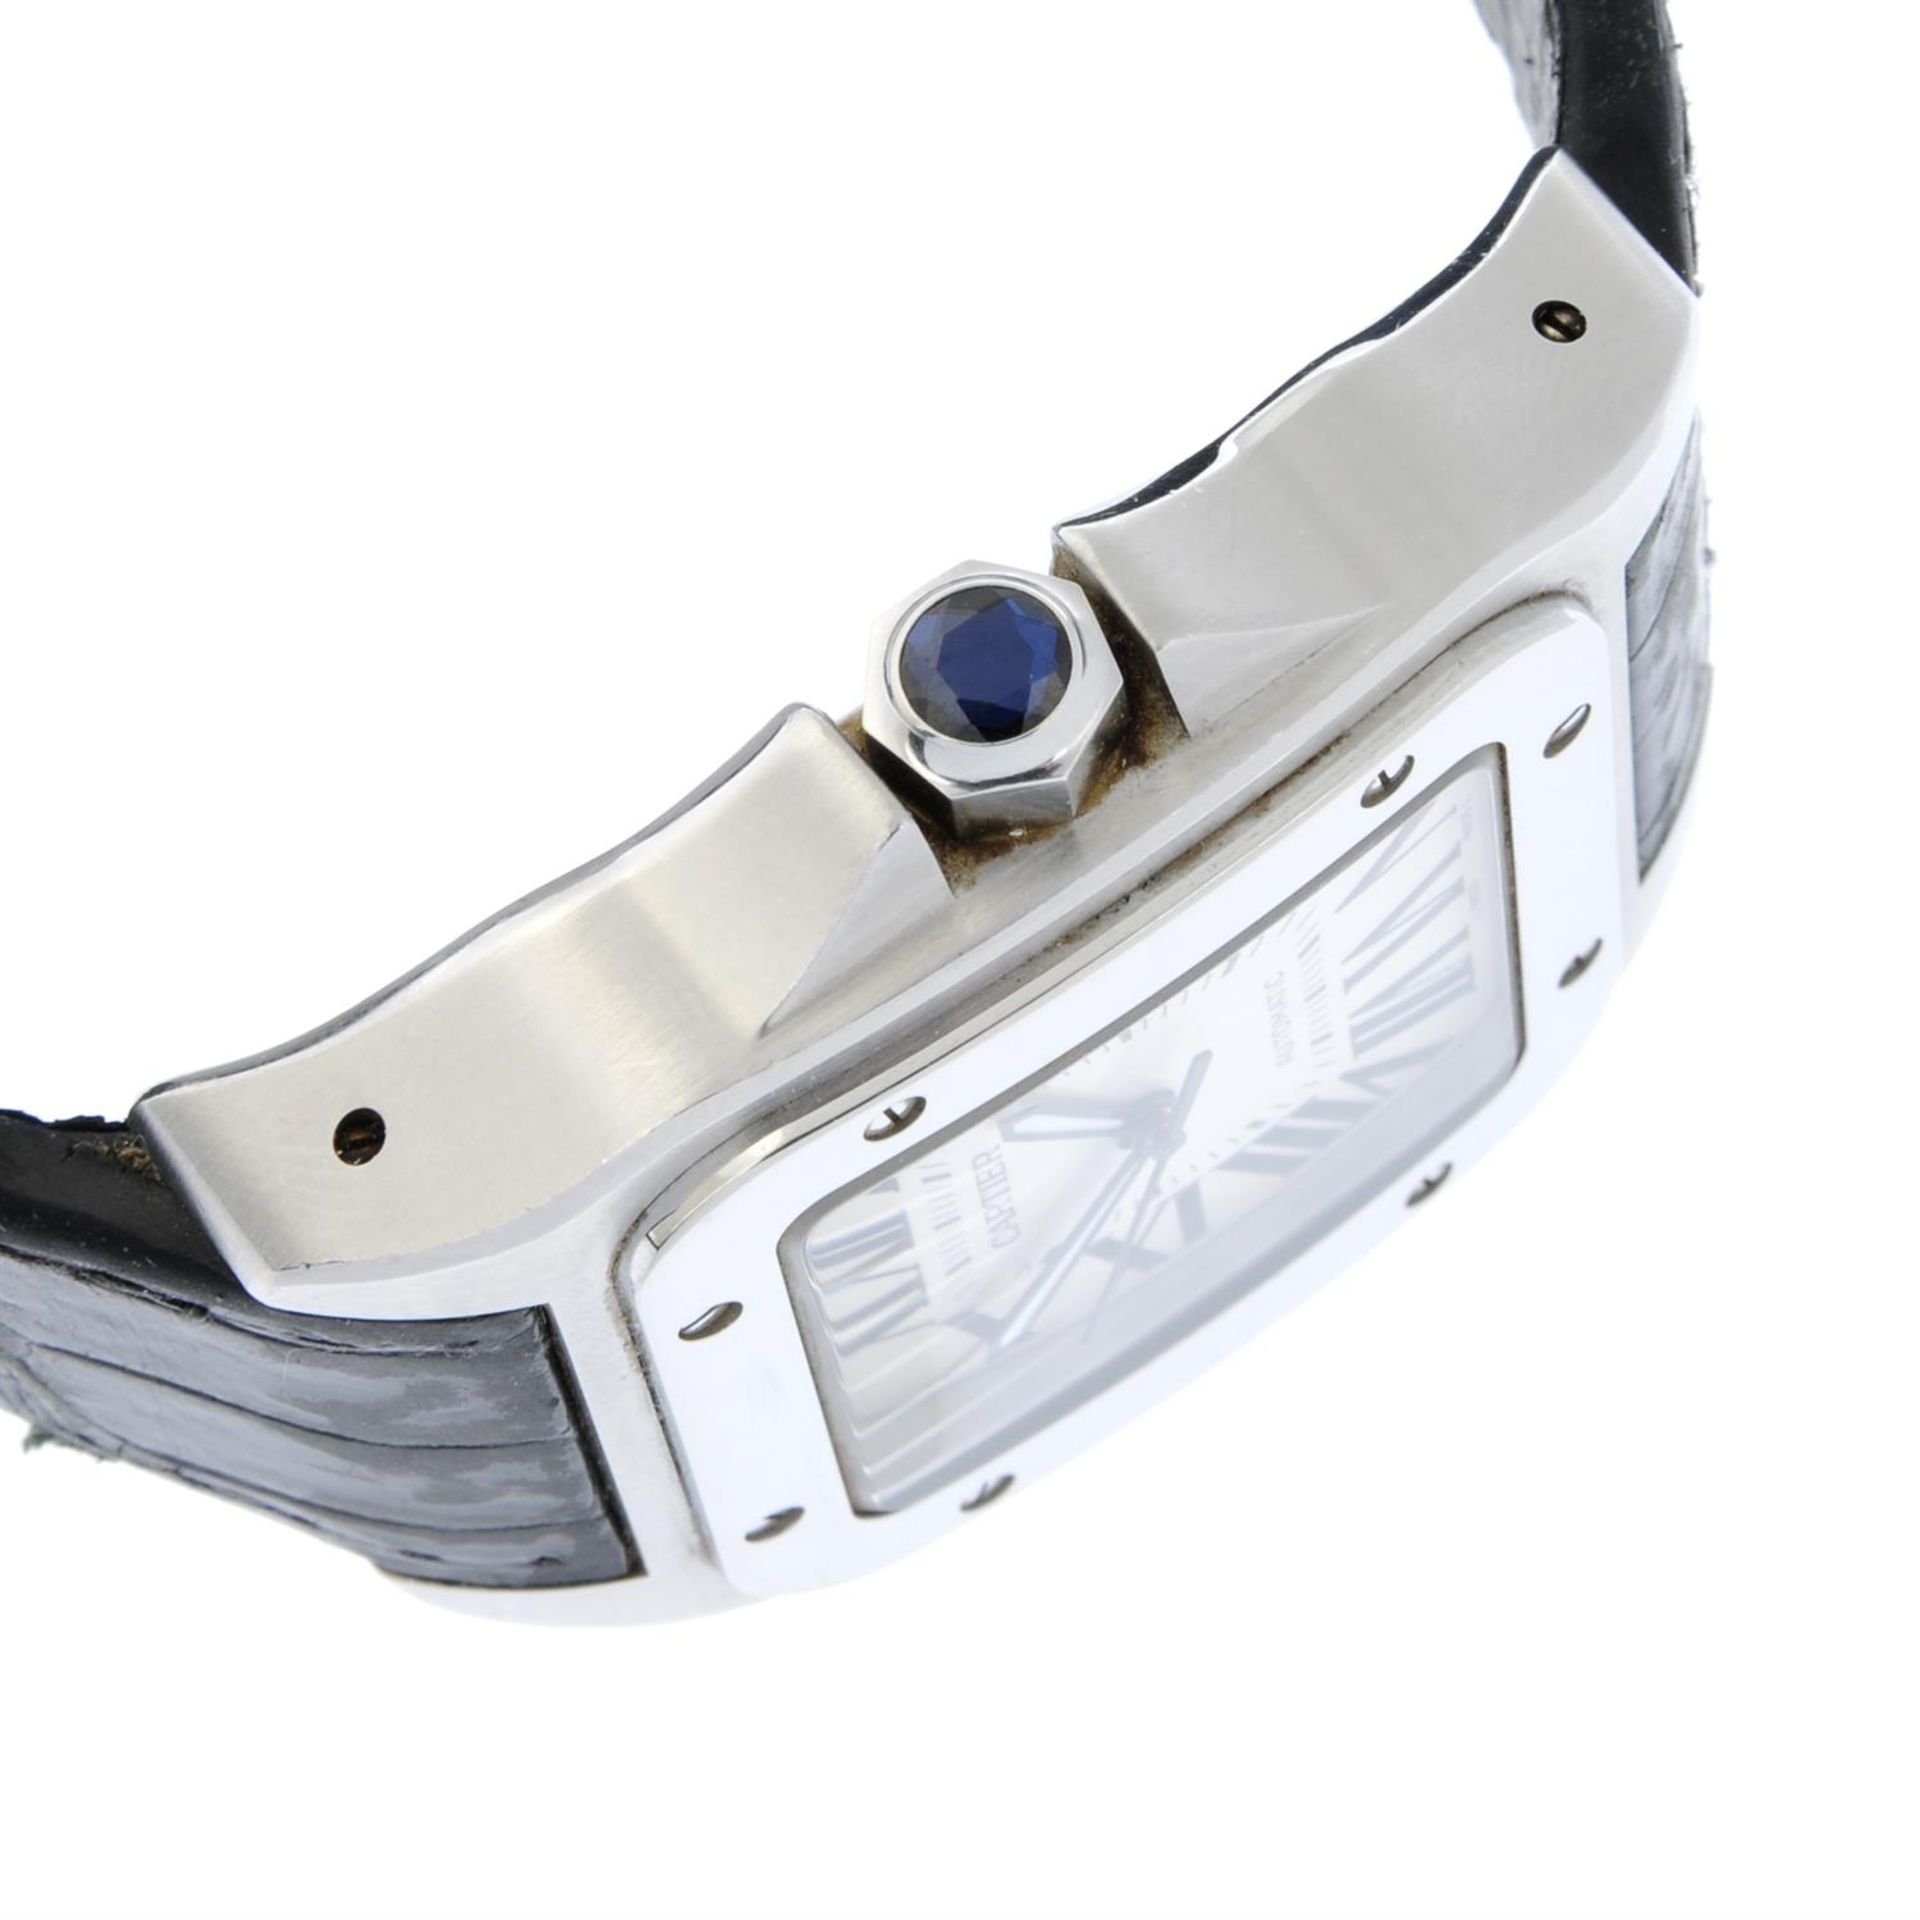 CARTIER - a stainless steel Santos 100 XL wrist watch, 38mm. - Image 3 of 6